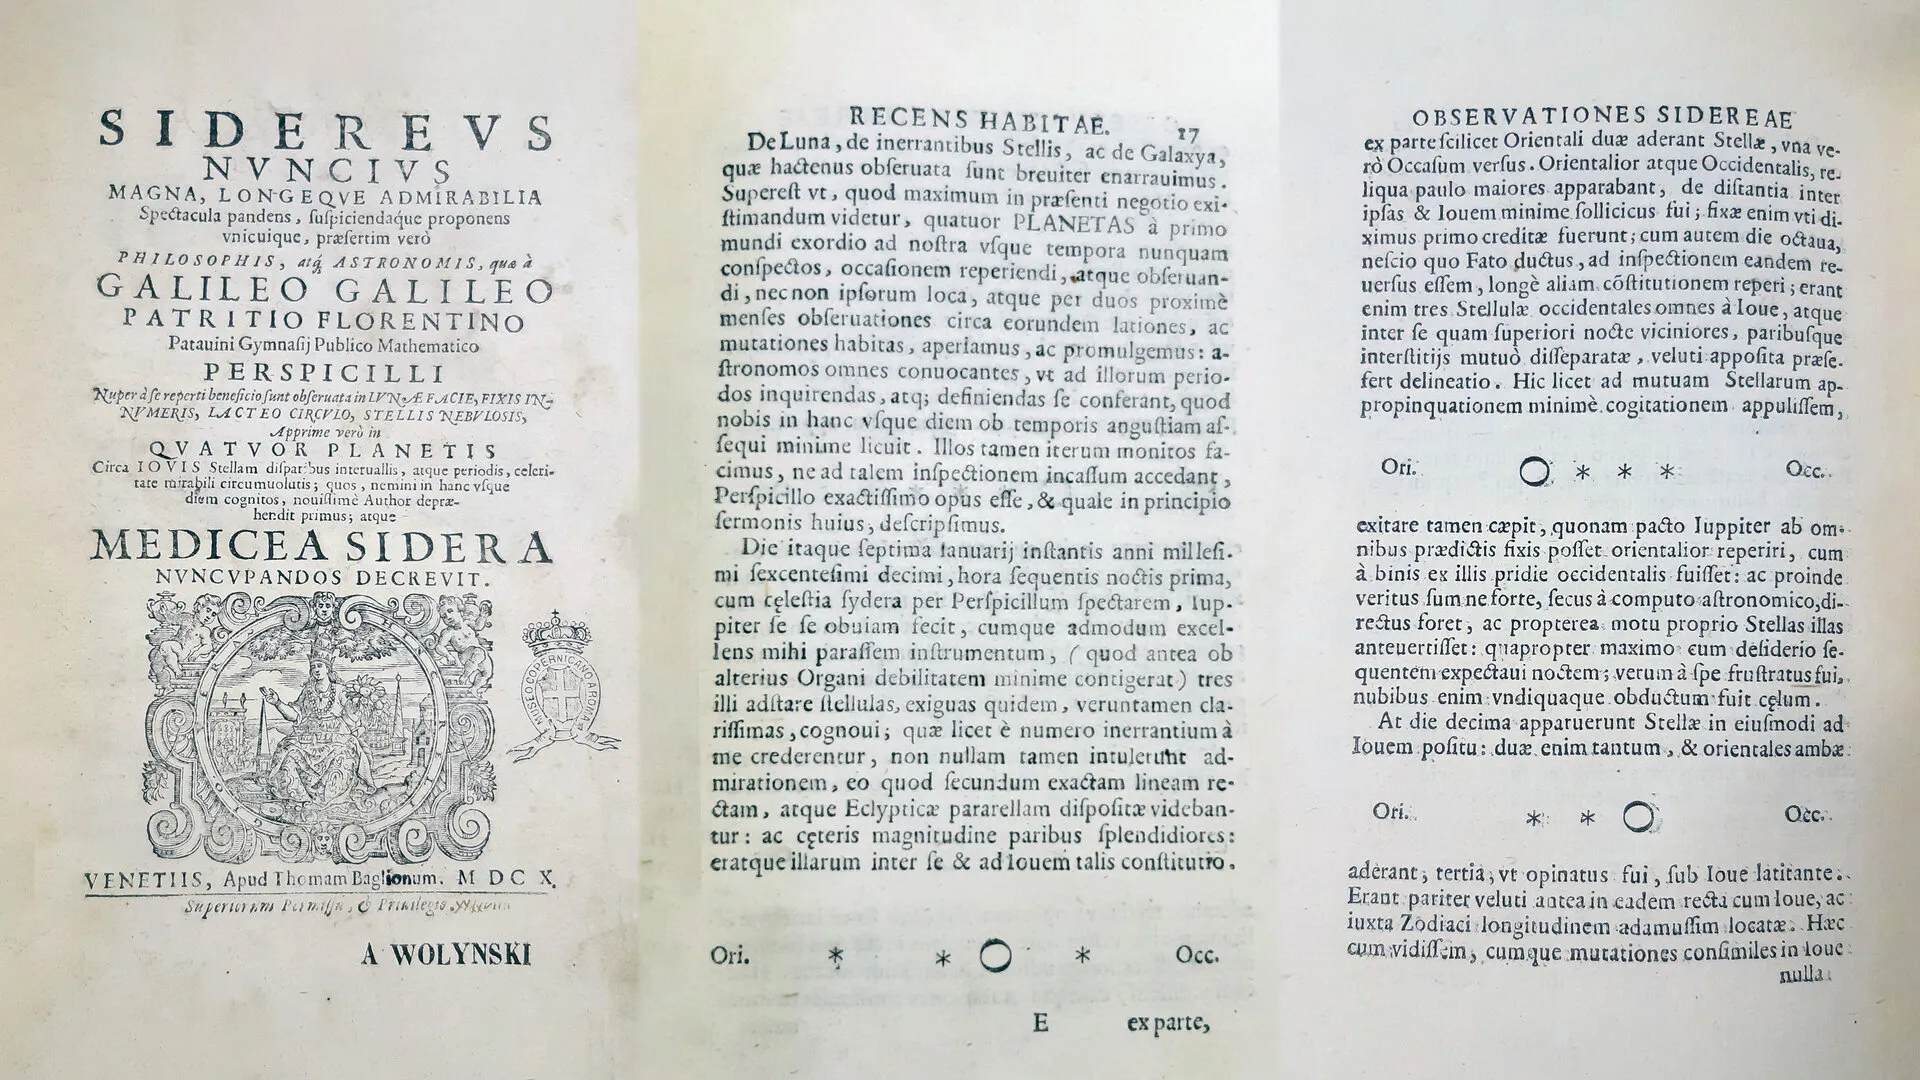 Juice任务所携带的伽利略1610年星际信使原稿。